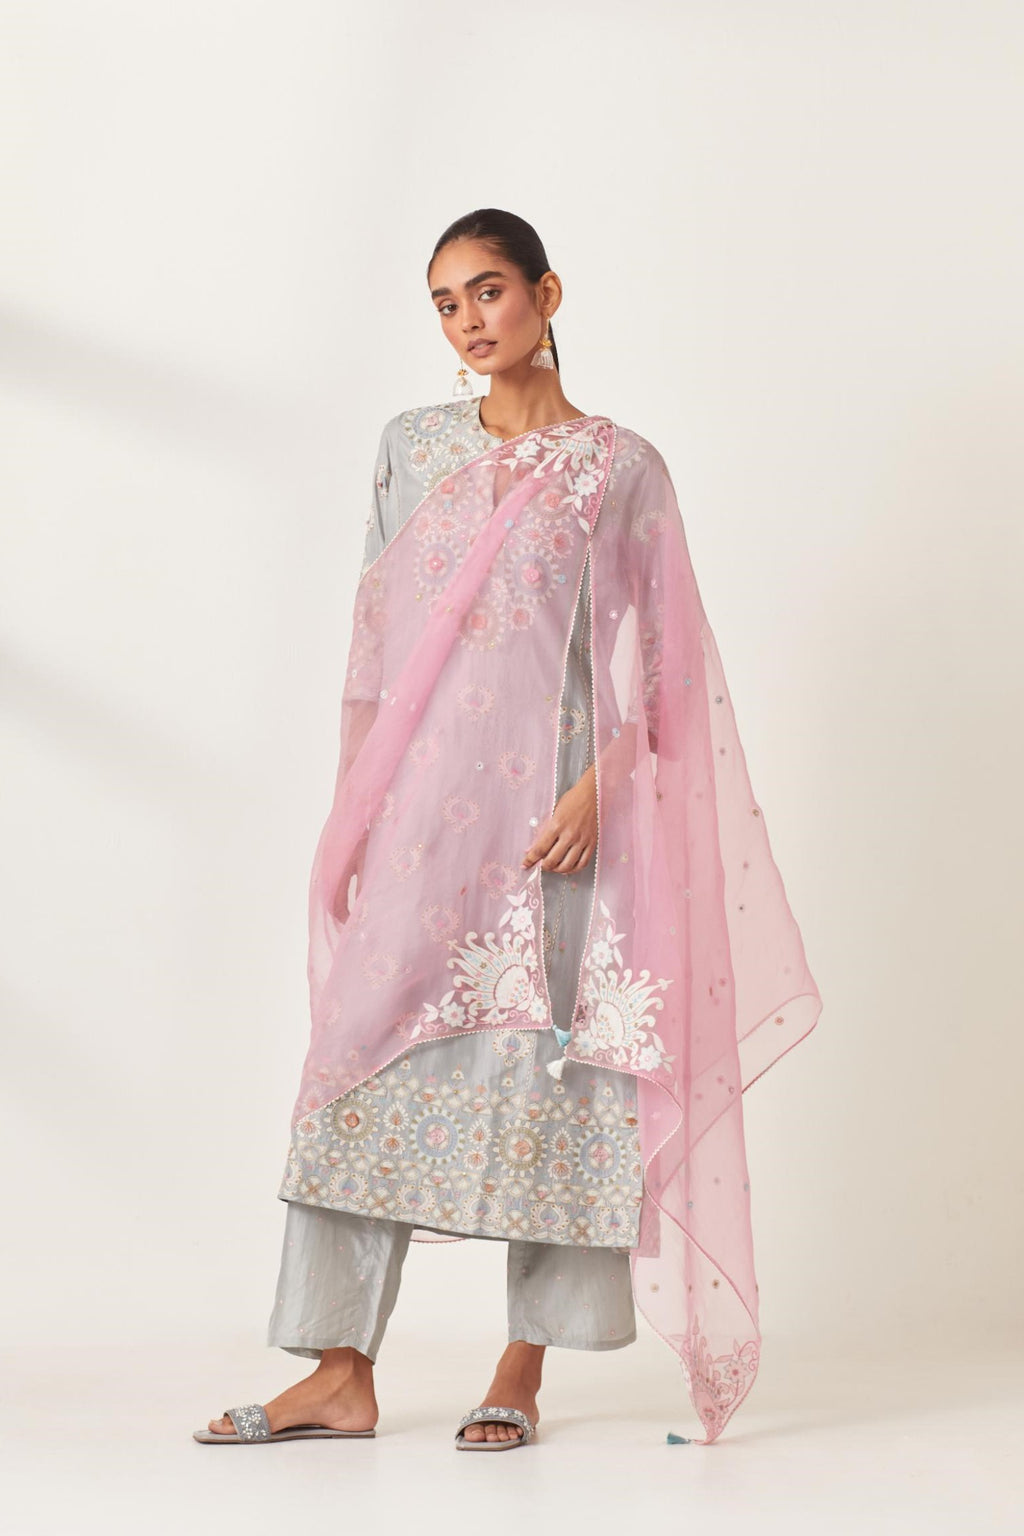 Blue kalidar straight kurta set, fully embroidered with appliqué flowers, multi-colored aari threadwork and silk tassels.